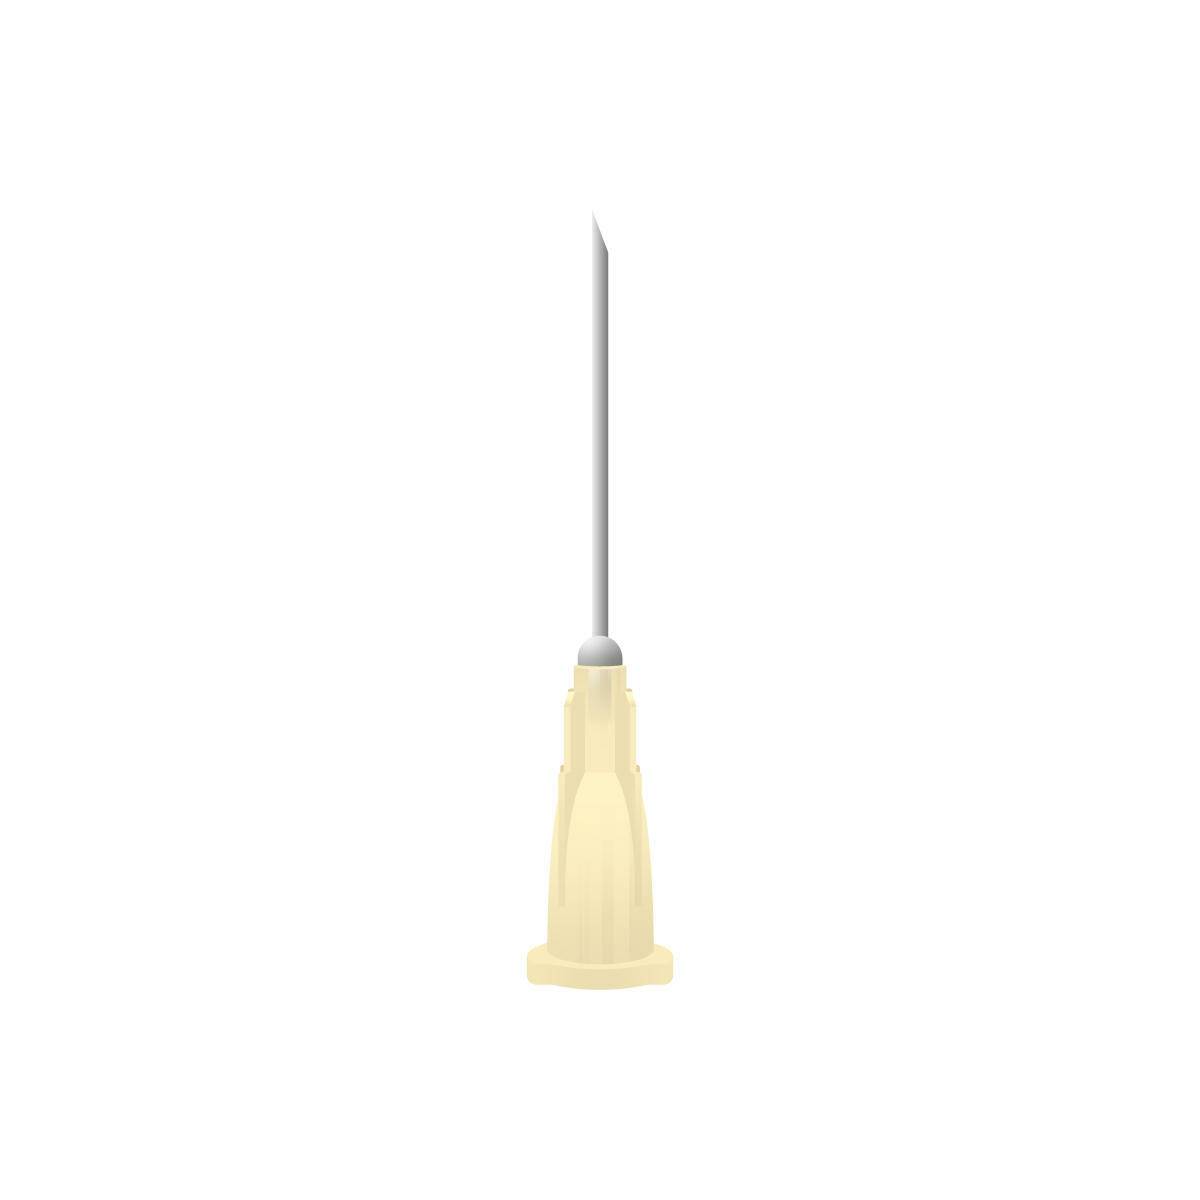 19g Cream 1 inch Terumo Needles - UKMEDI